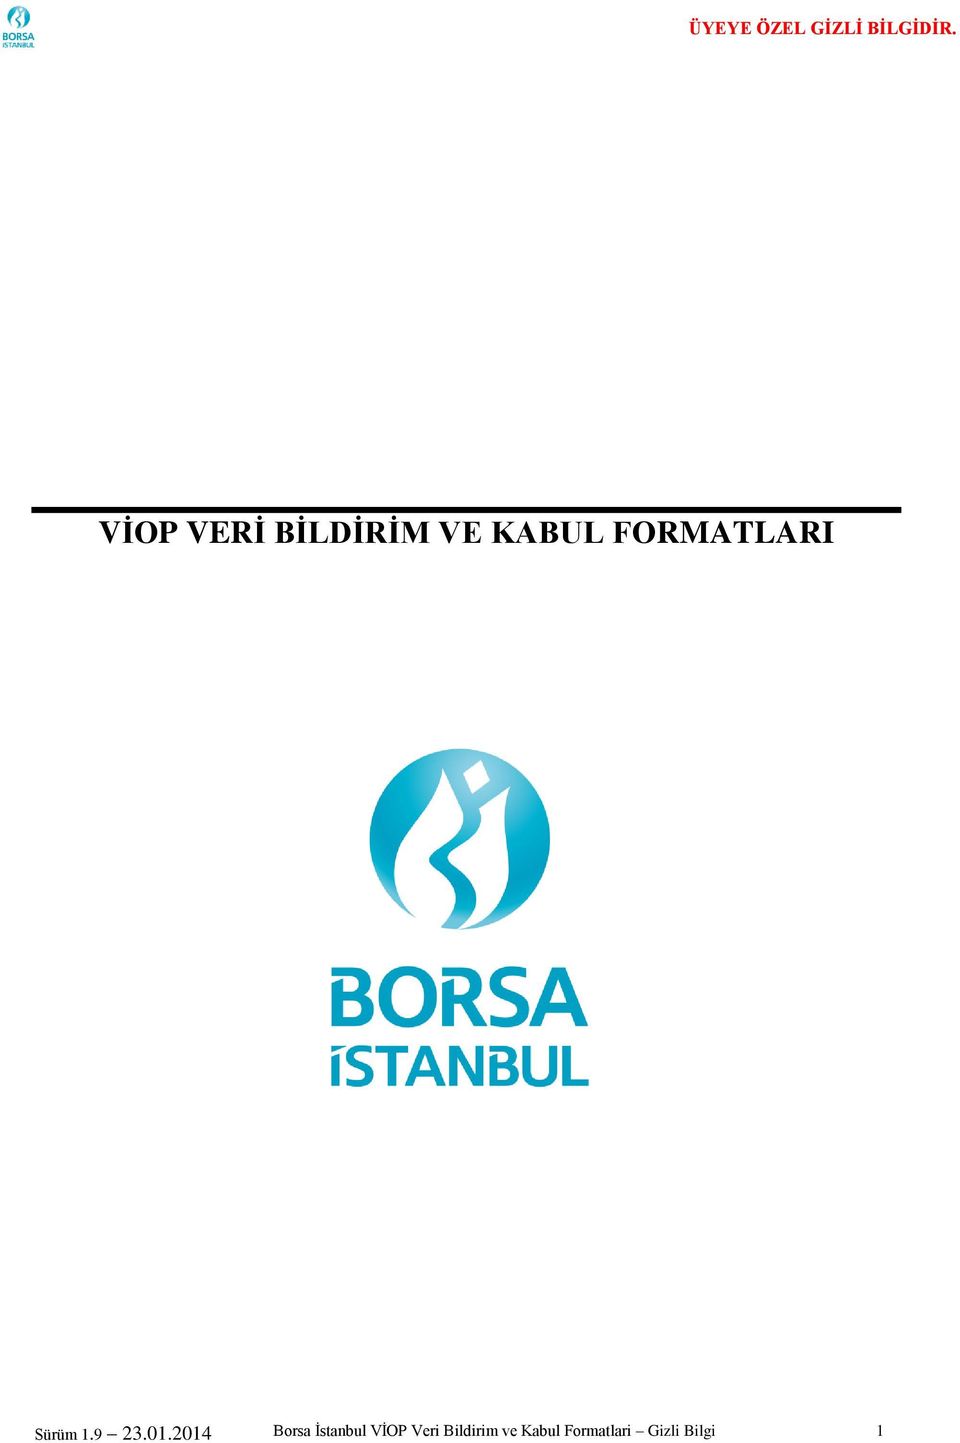 2014 Borsa İstanbul VİOP Veri